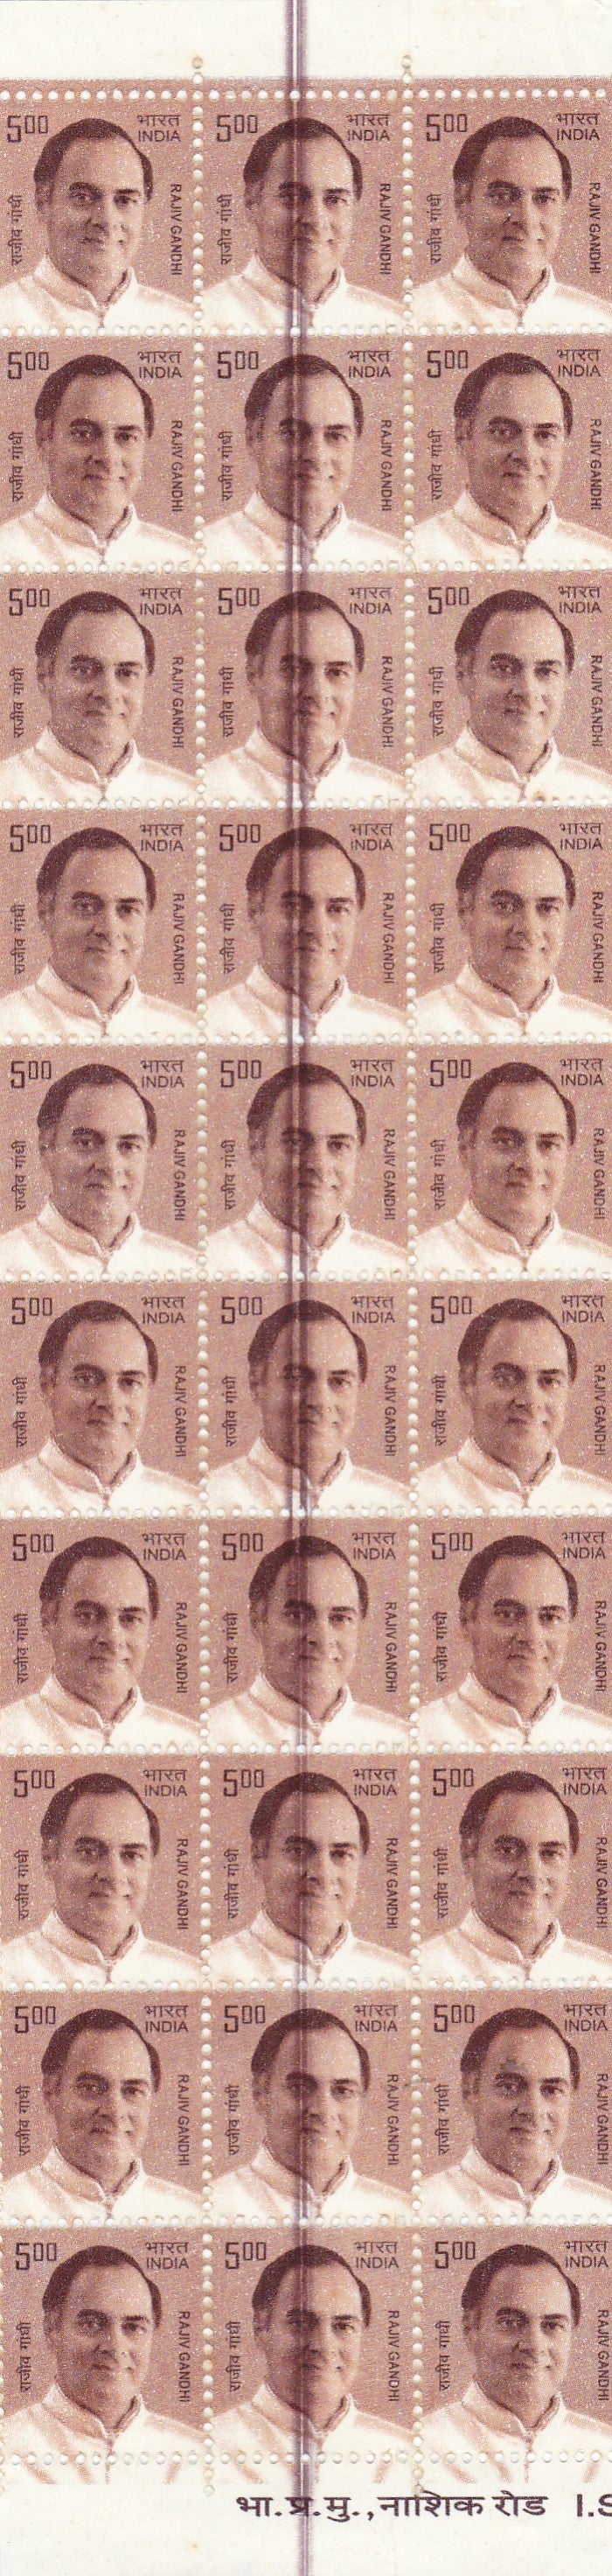 India-Rajiv Gandhi definitive B13 stamps with printing error .Doctor's Blade .